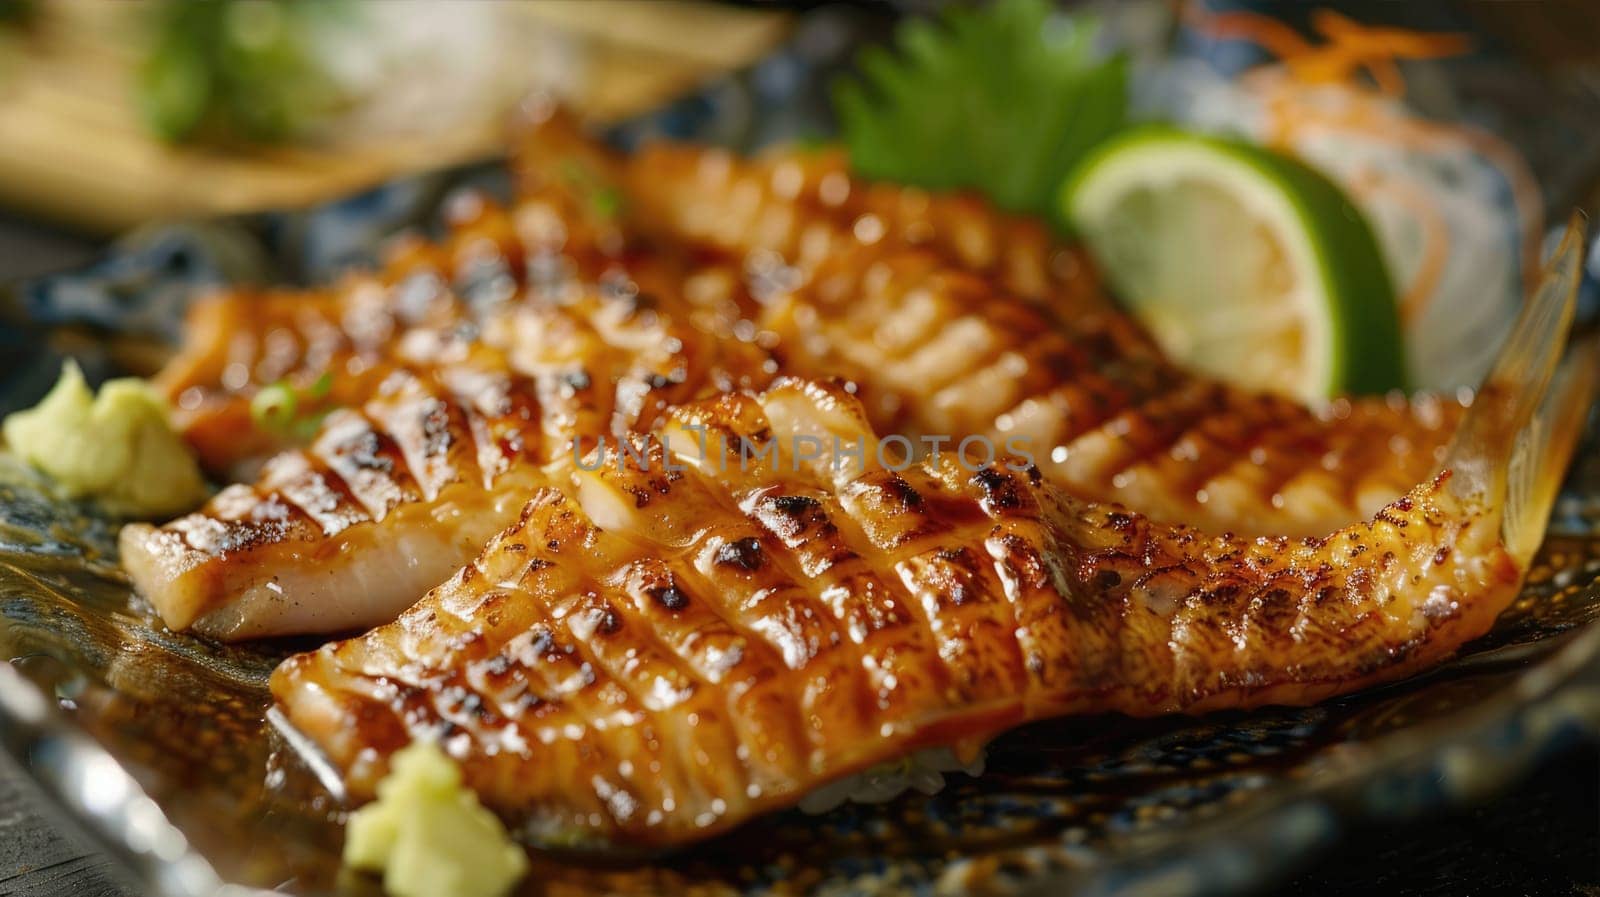 Stingray wings. Traditional dish of Japan by natali_brill